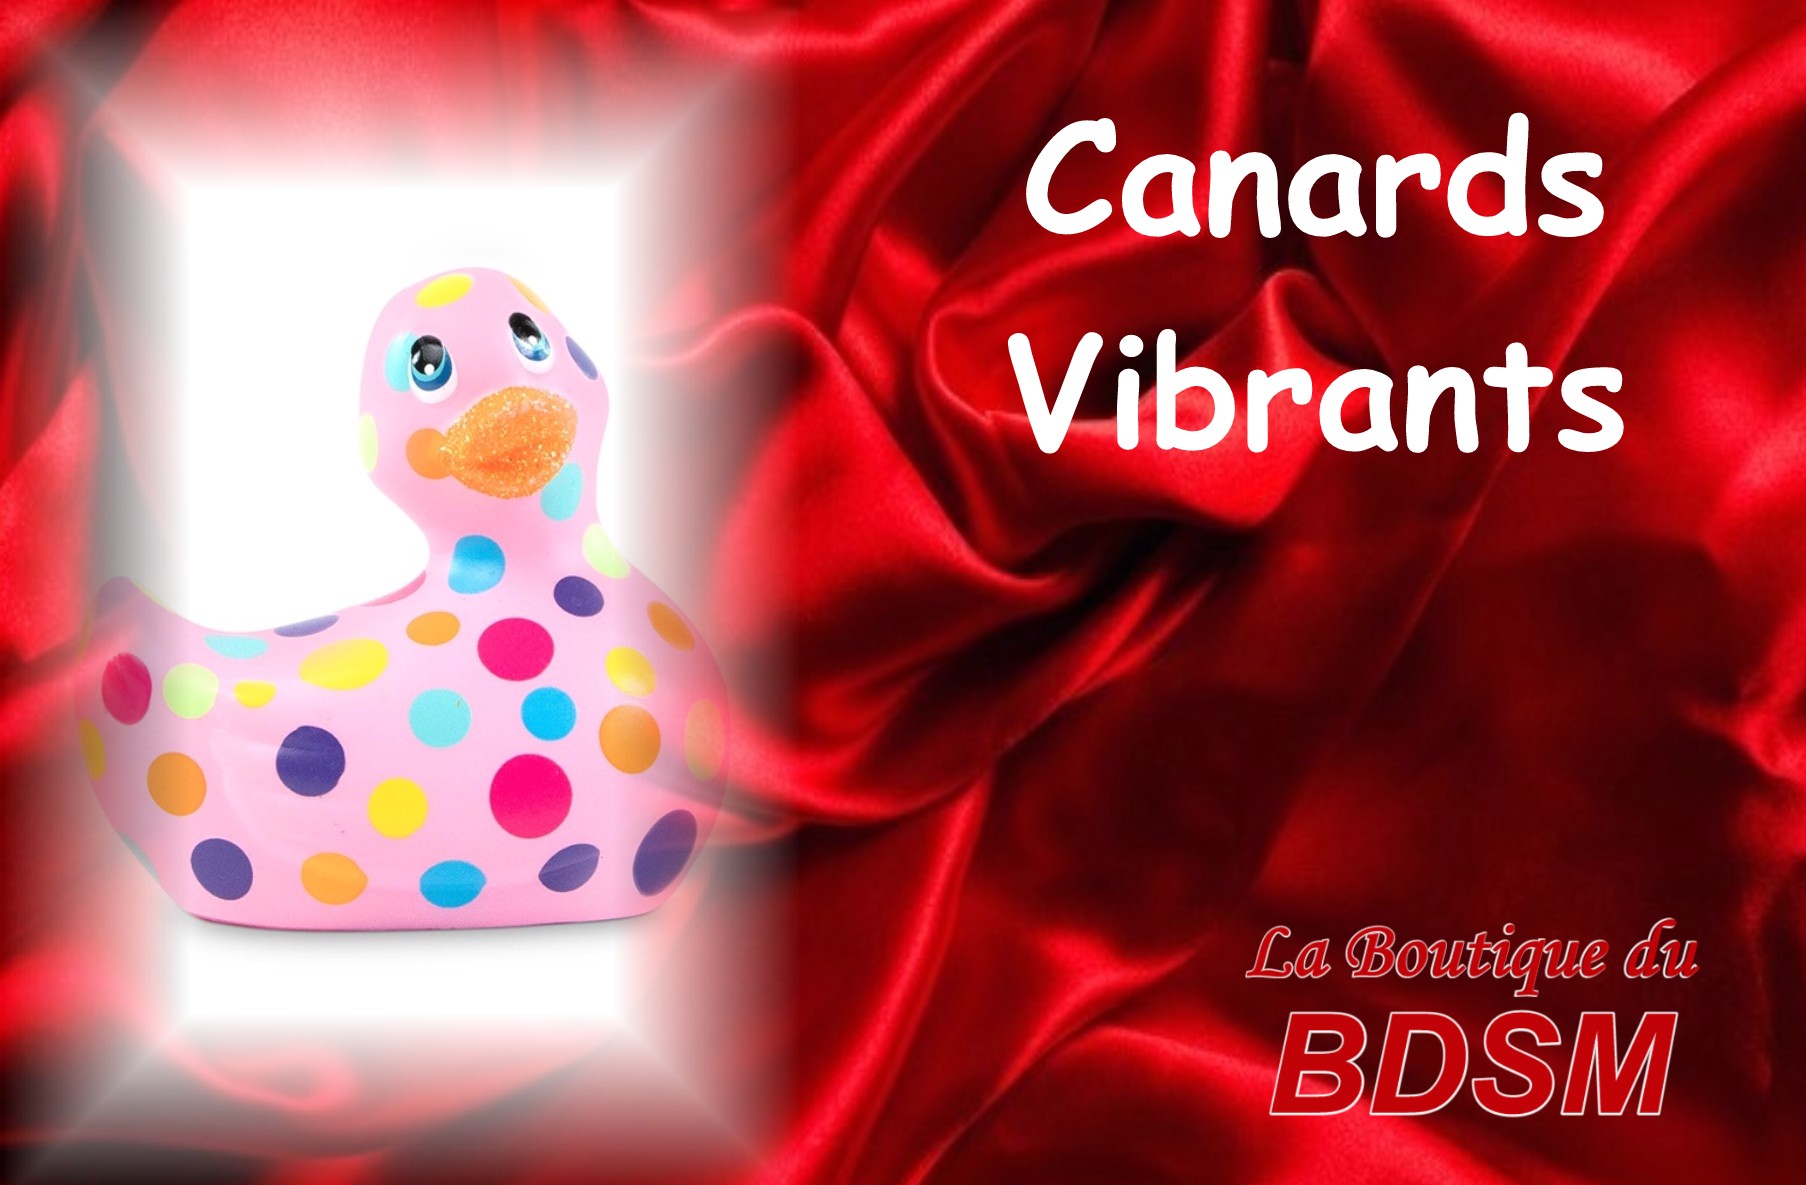 CANARDS VIBRANTS PRESSIGNAC 16